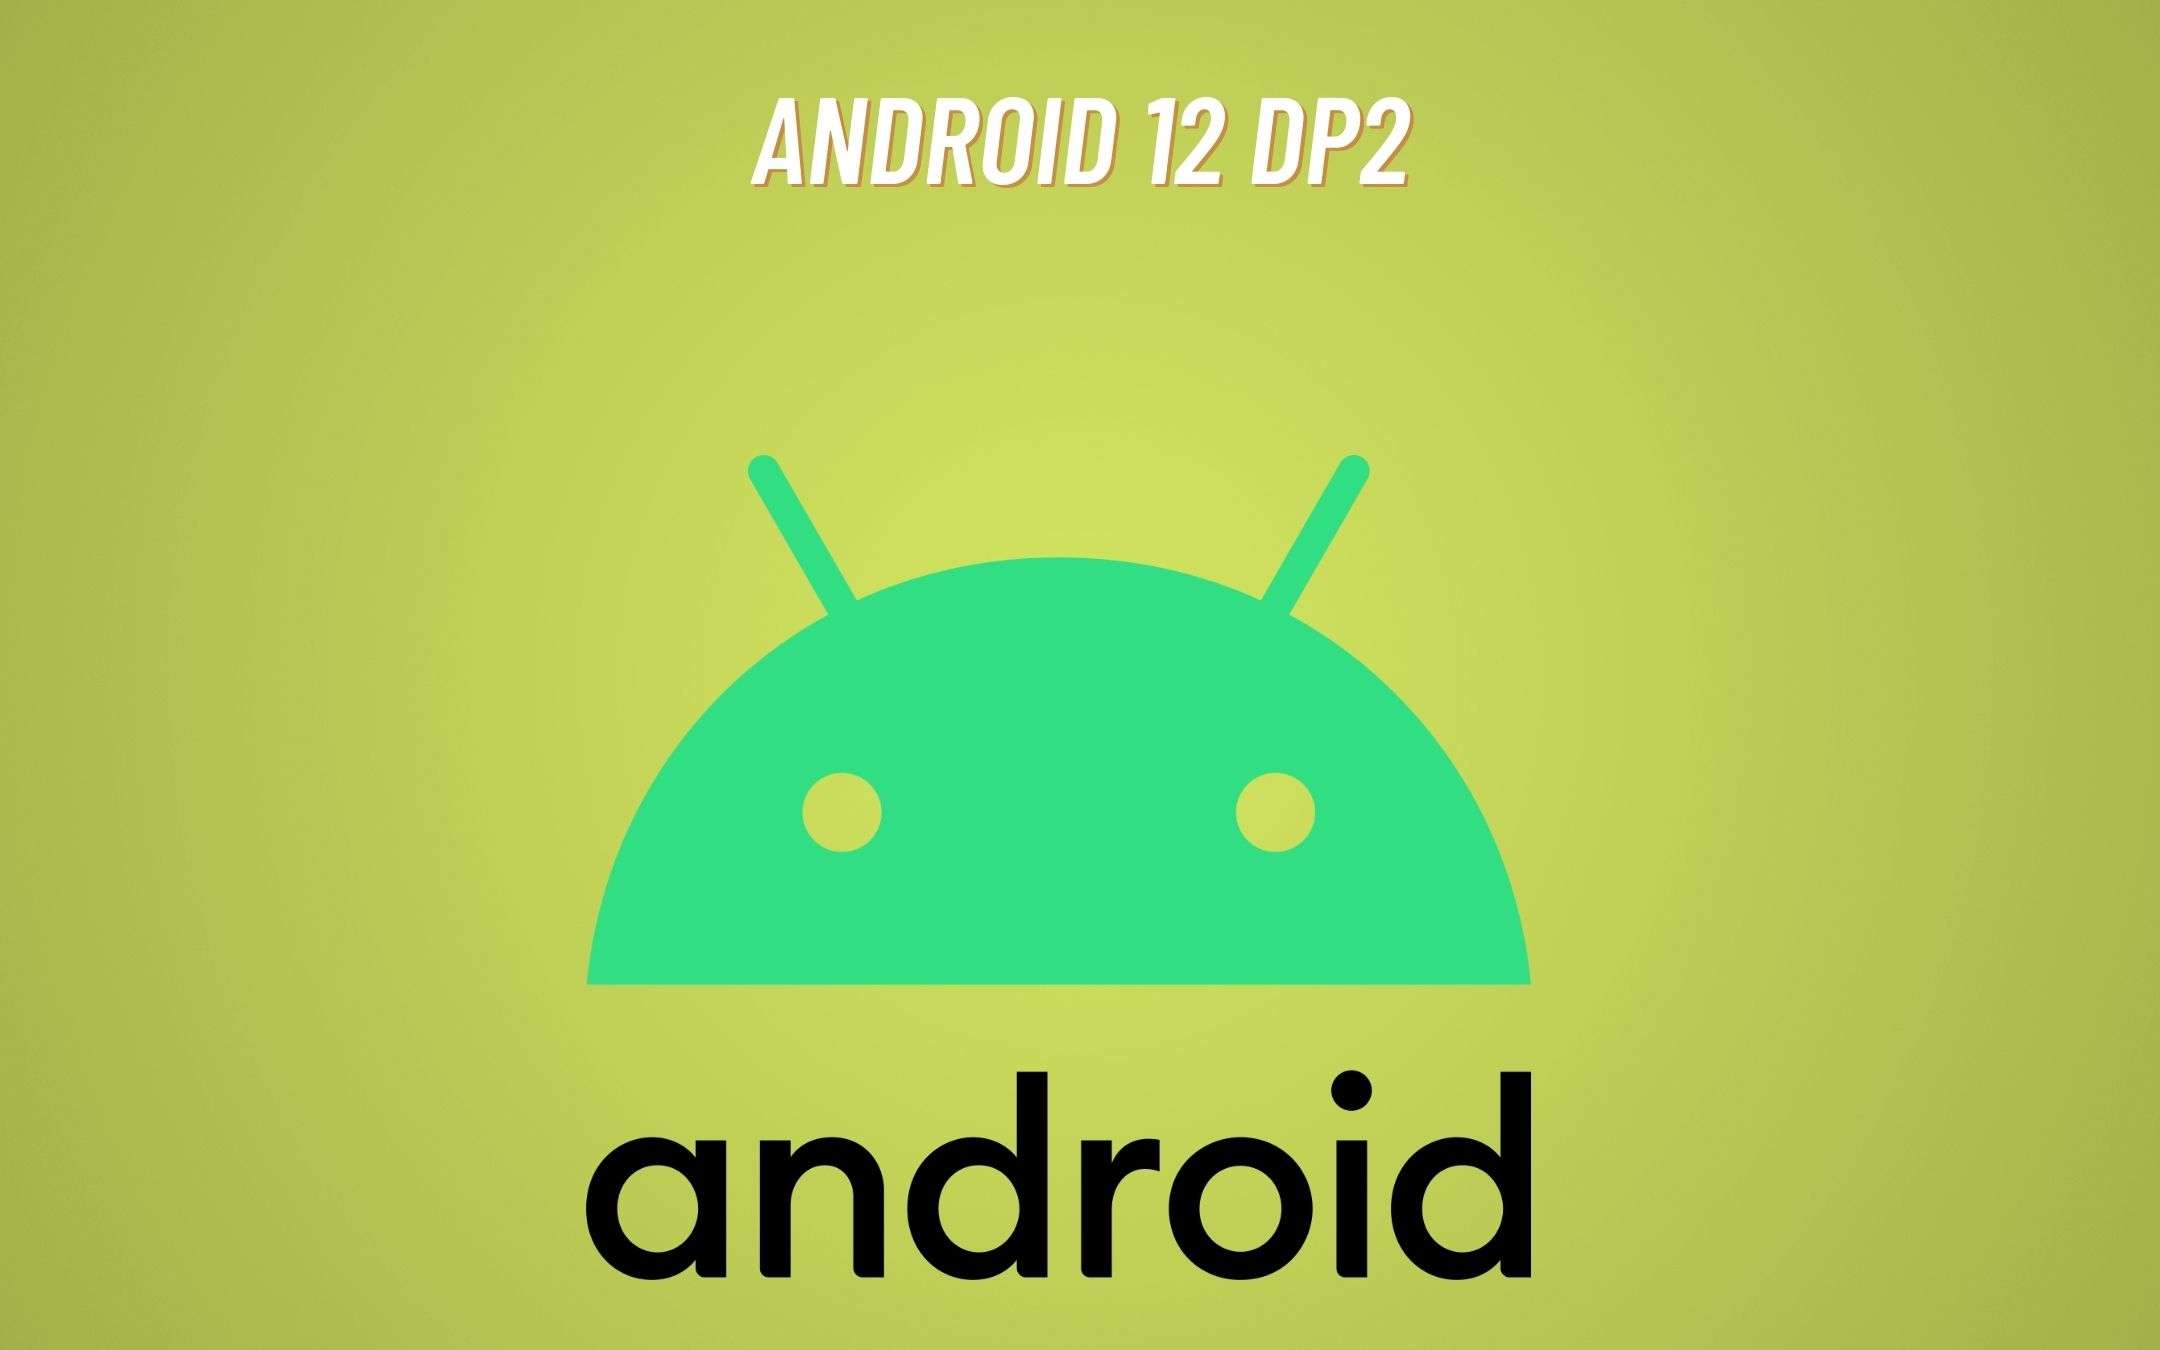 Android 12 avrà una GAMING mode innovativa